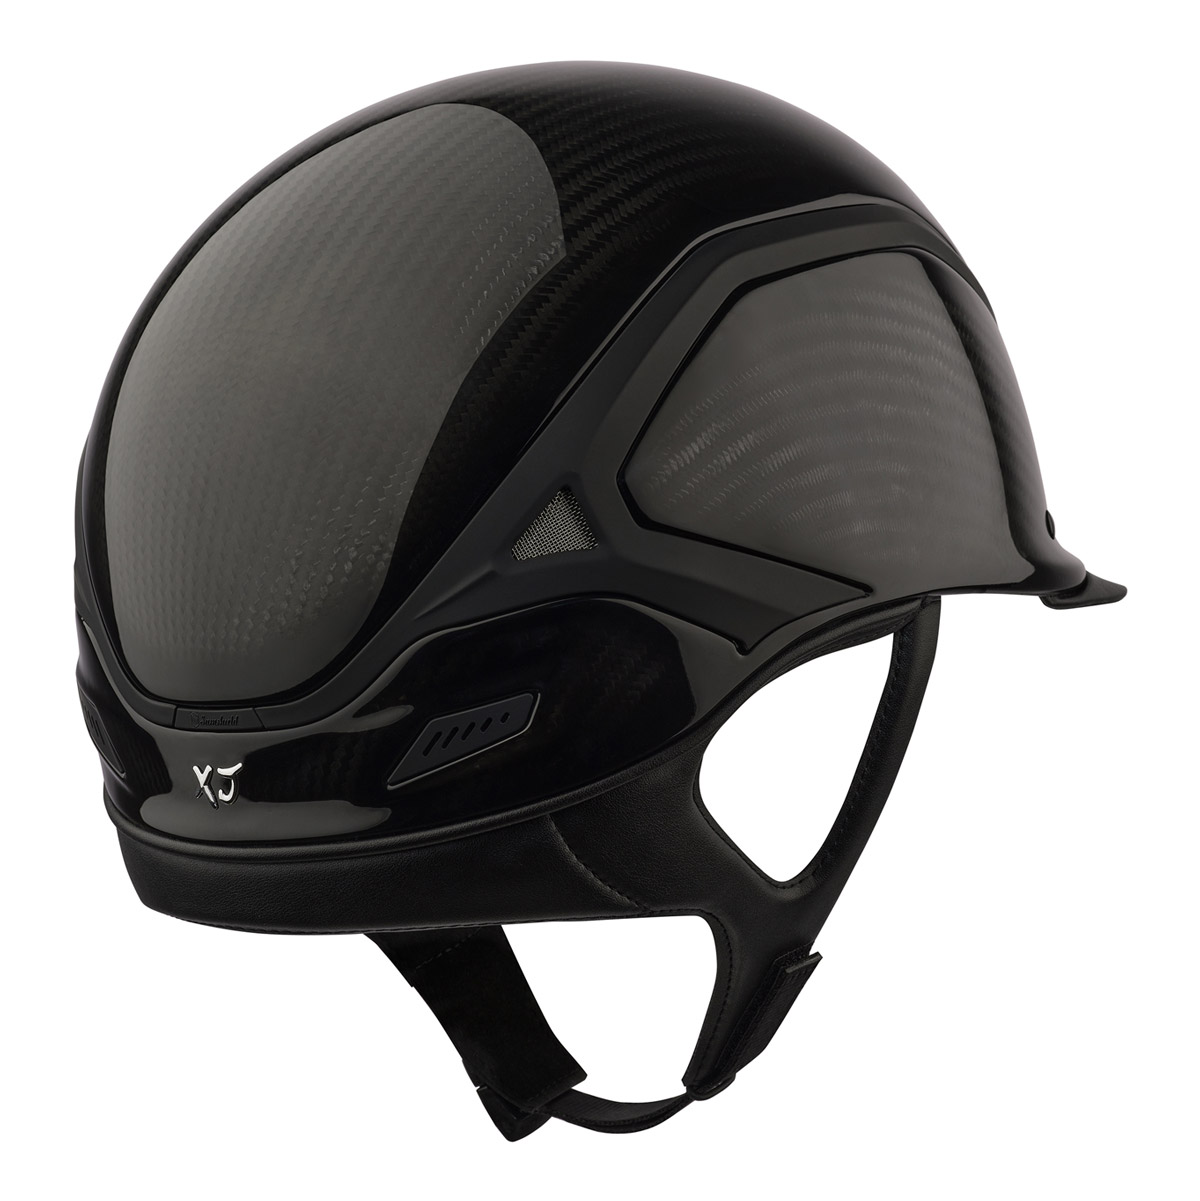 Samshield XJ Limited Edition Riding Helmet - Black Gloss/Matt Black